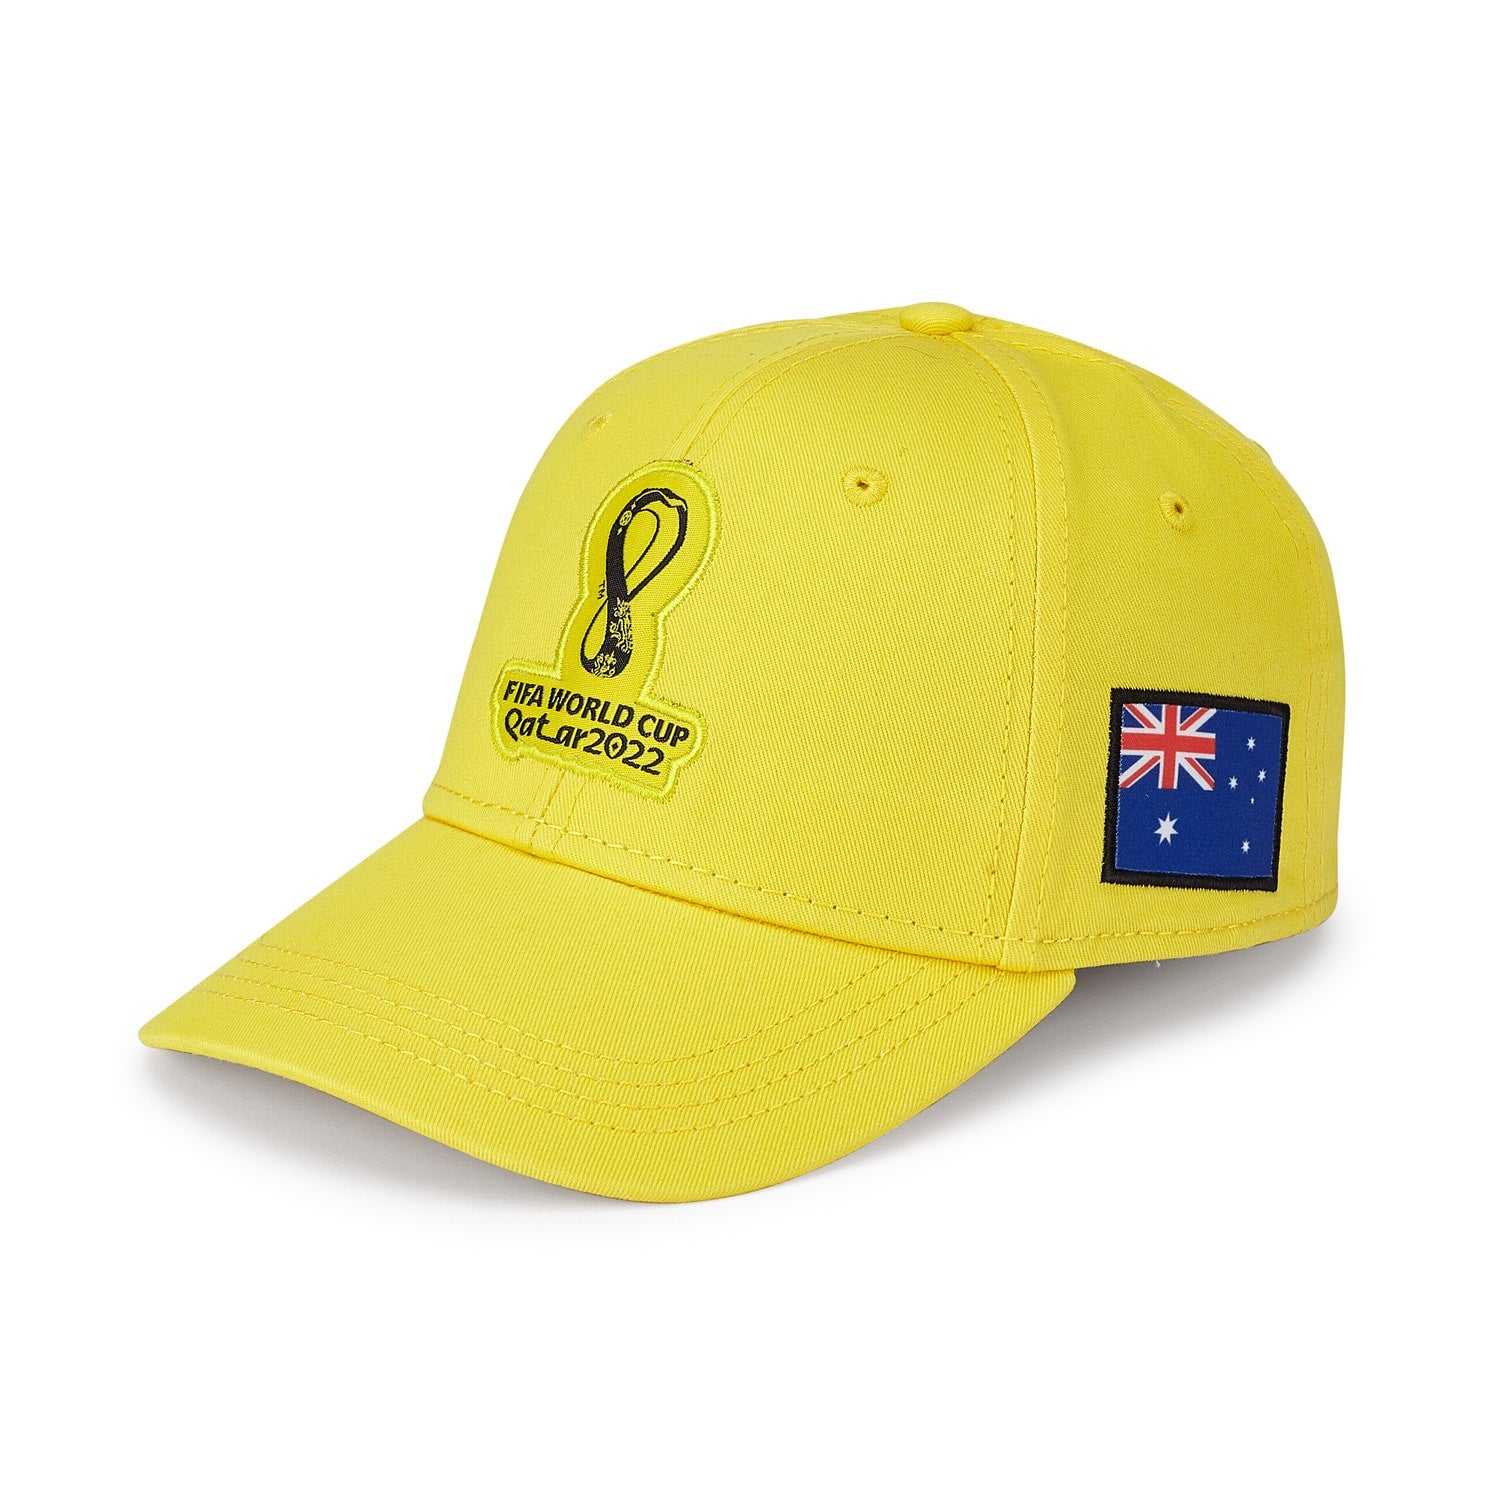 2022 World Cup Australia Yellow Cap - Mens